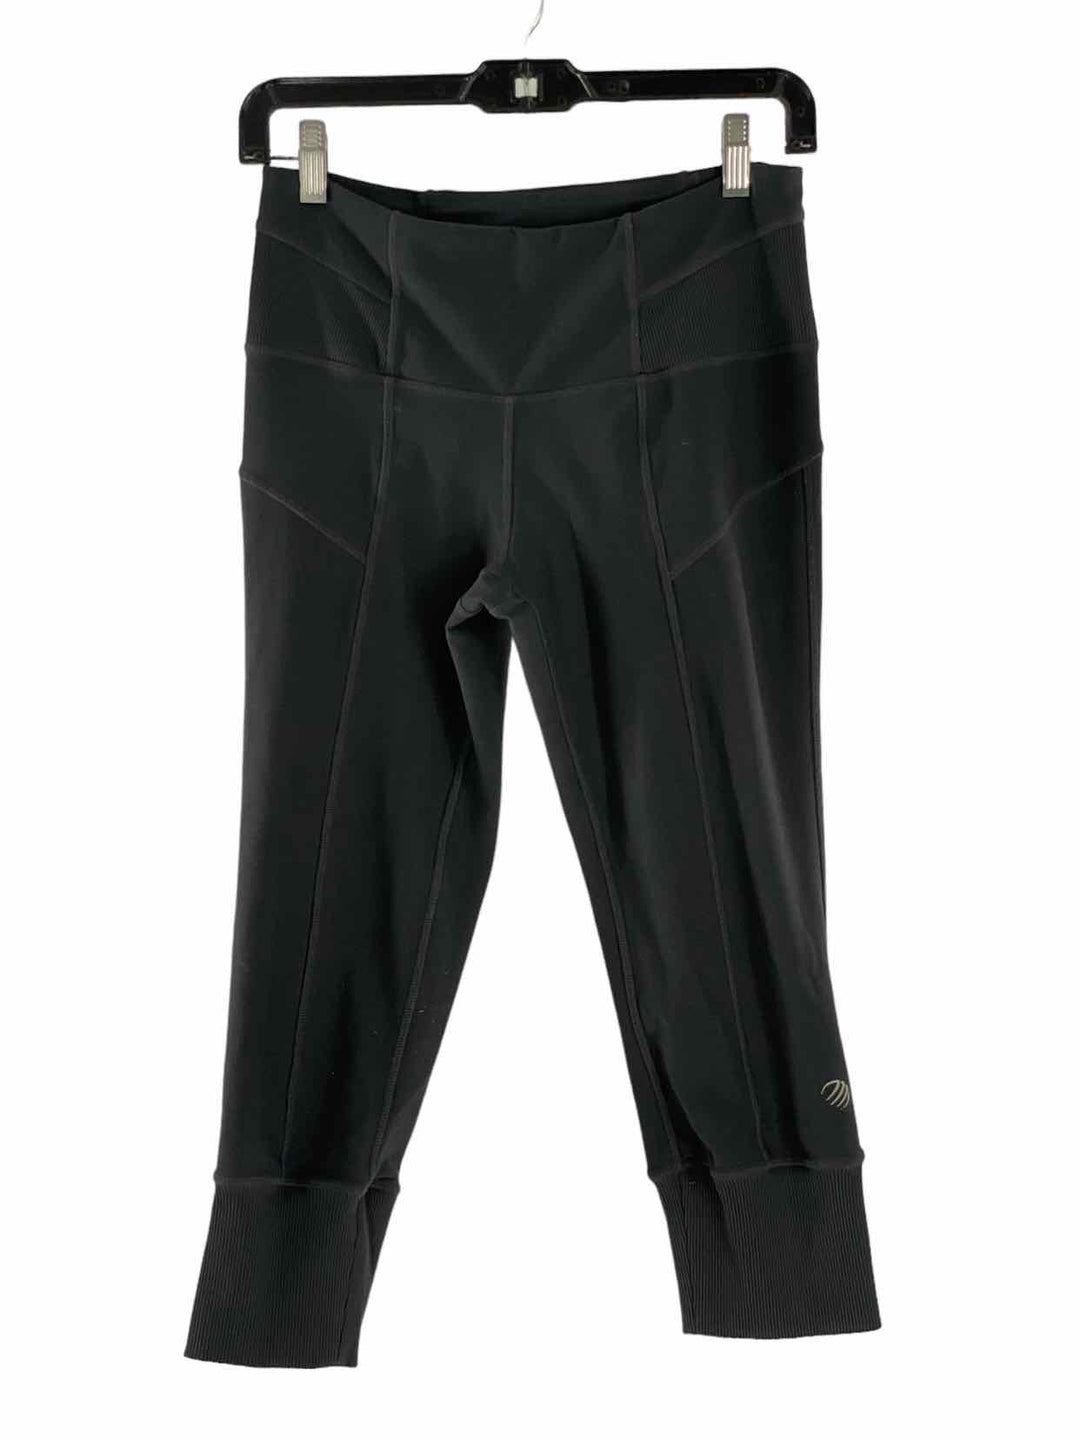 MNG Size S Dark Grey Athletic Pants